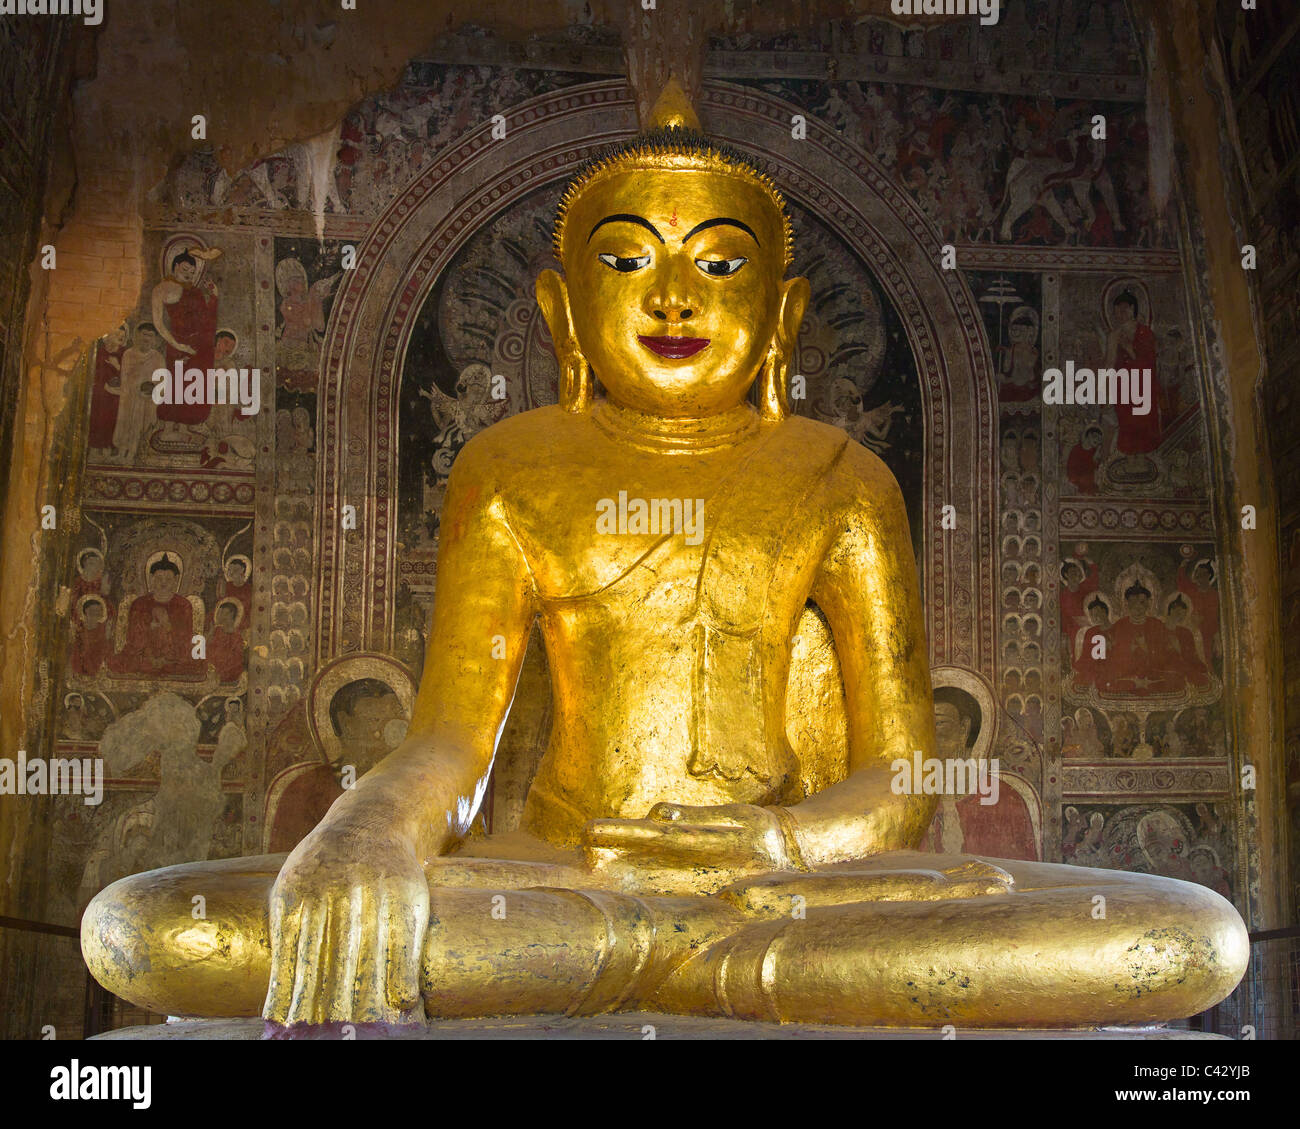 Goldene Statue des Buddha in einem Tempel von Bagan - Bagan, Myanmar, Burma Stockfoto